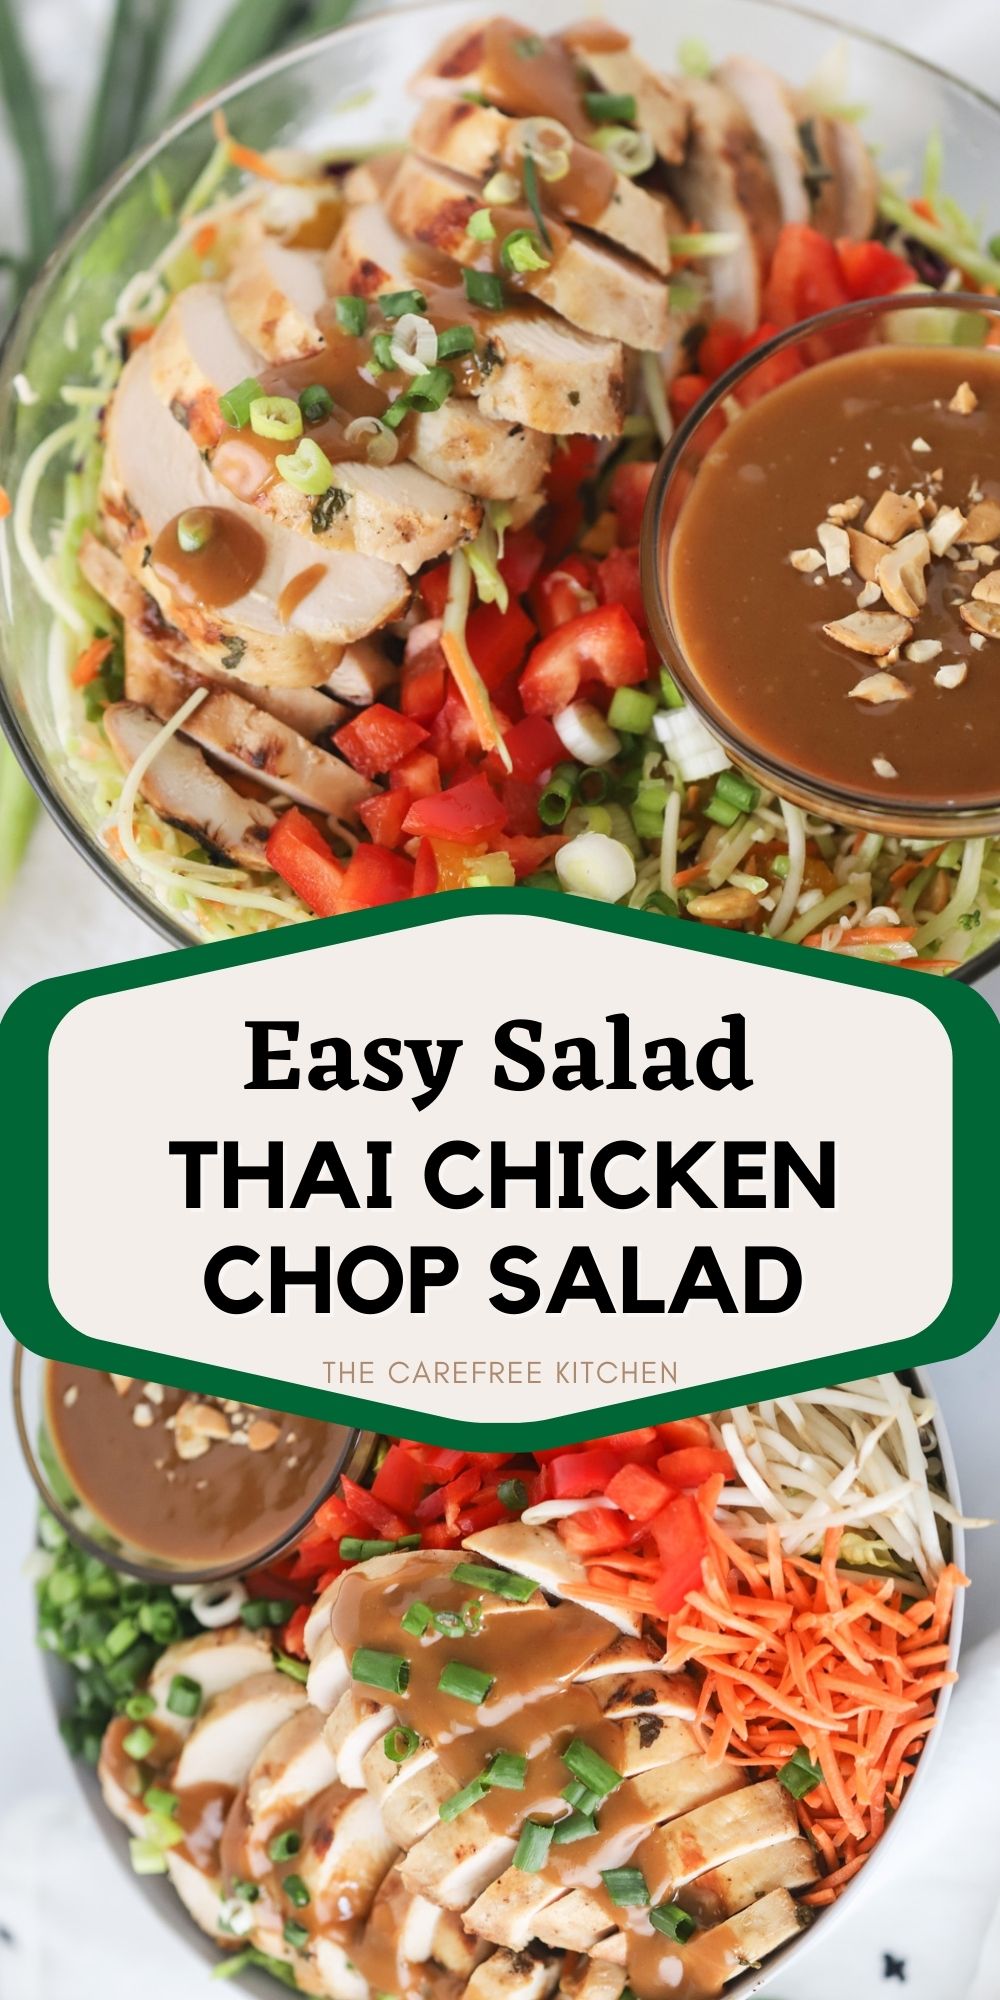 Thai Chicken Chopped Salad - The Carefree Kitchen